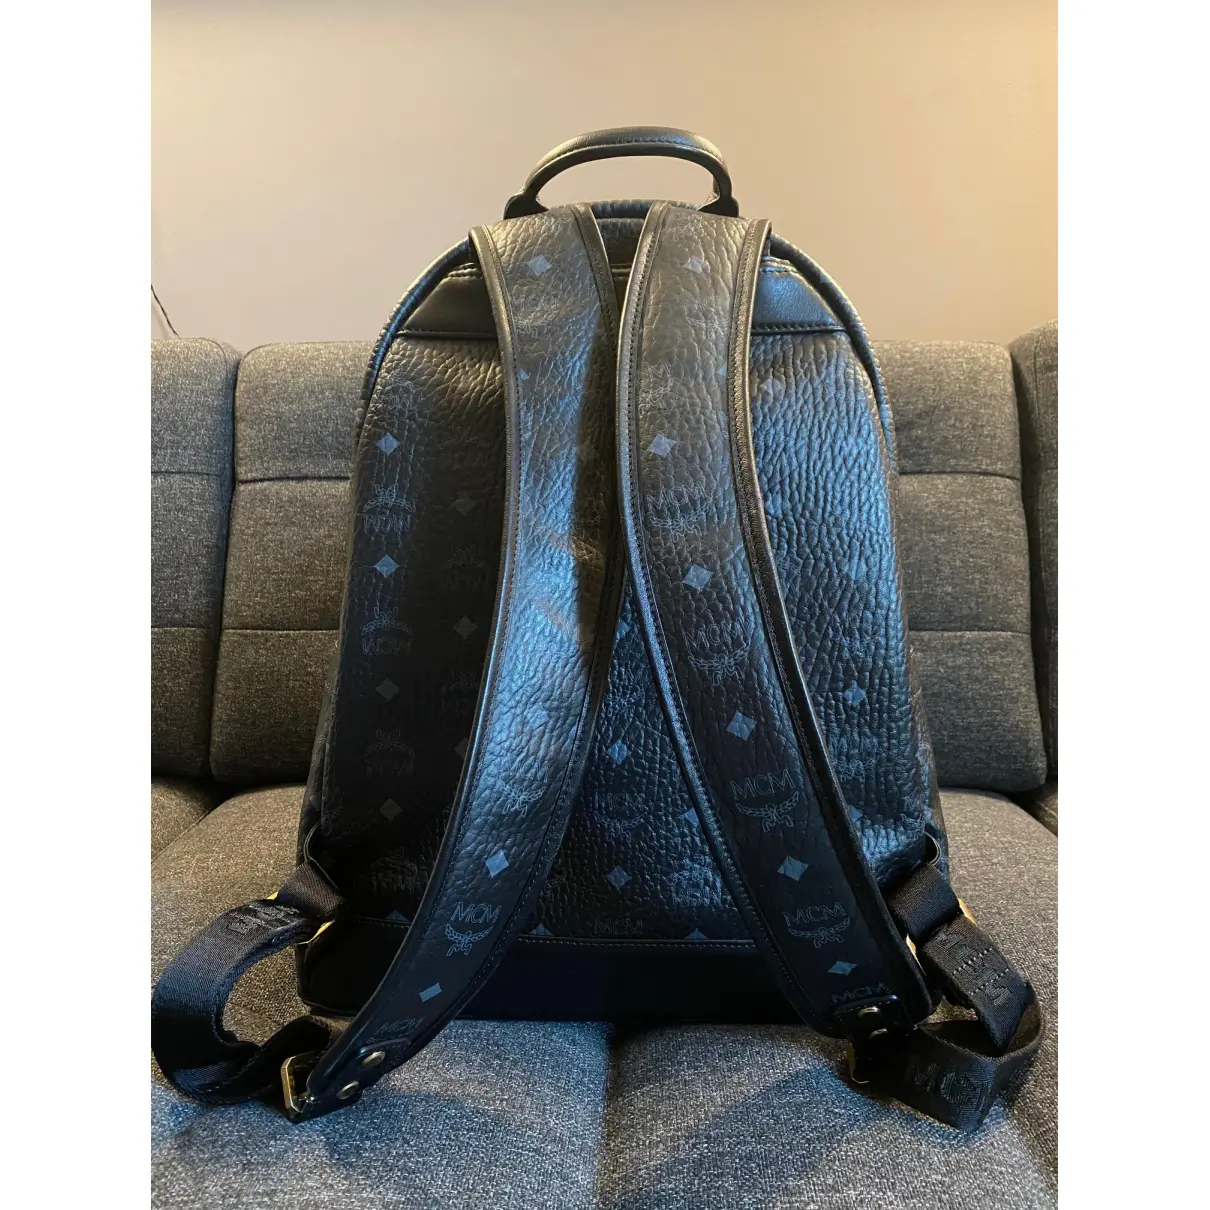 Buy MCM Stark leather backpack online